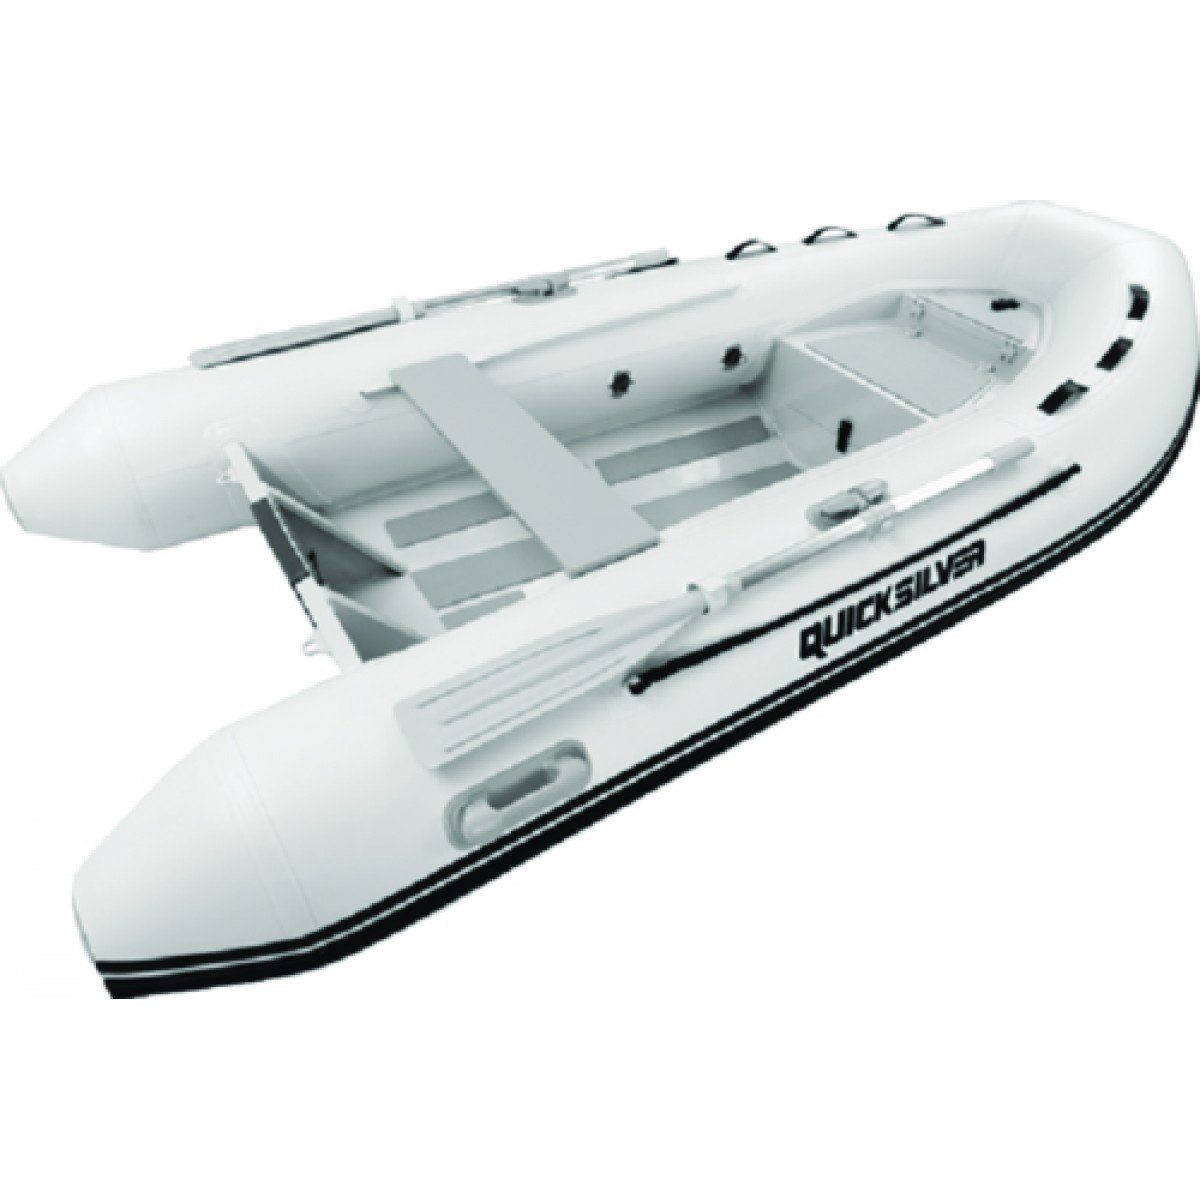 Quicksilver 420 Aluminum Double Hull RIB Inflatable Boat PVC - AA420005N  |Steveston Marine Canada